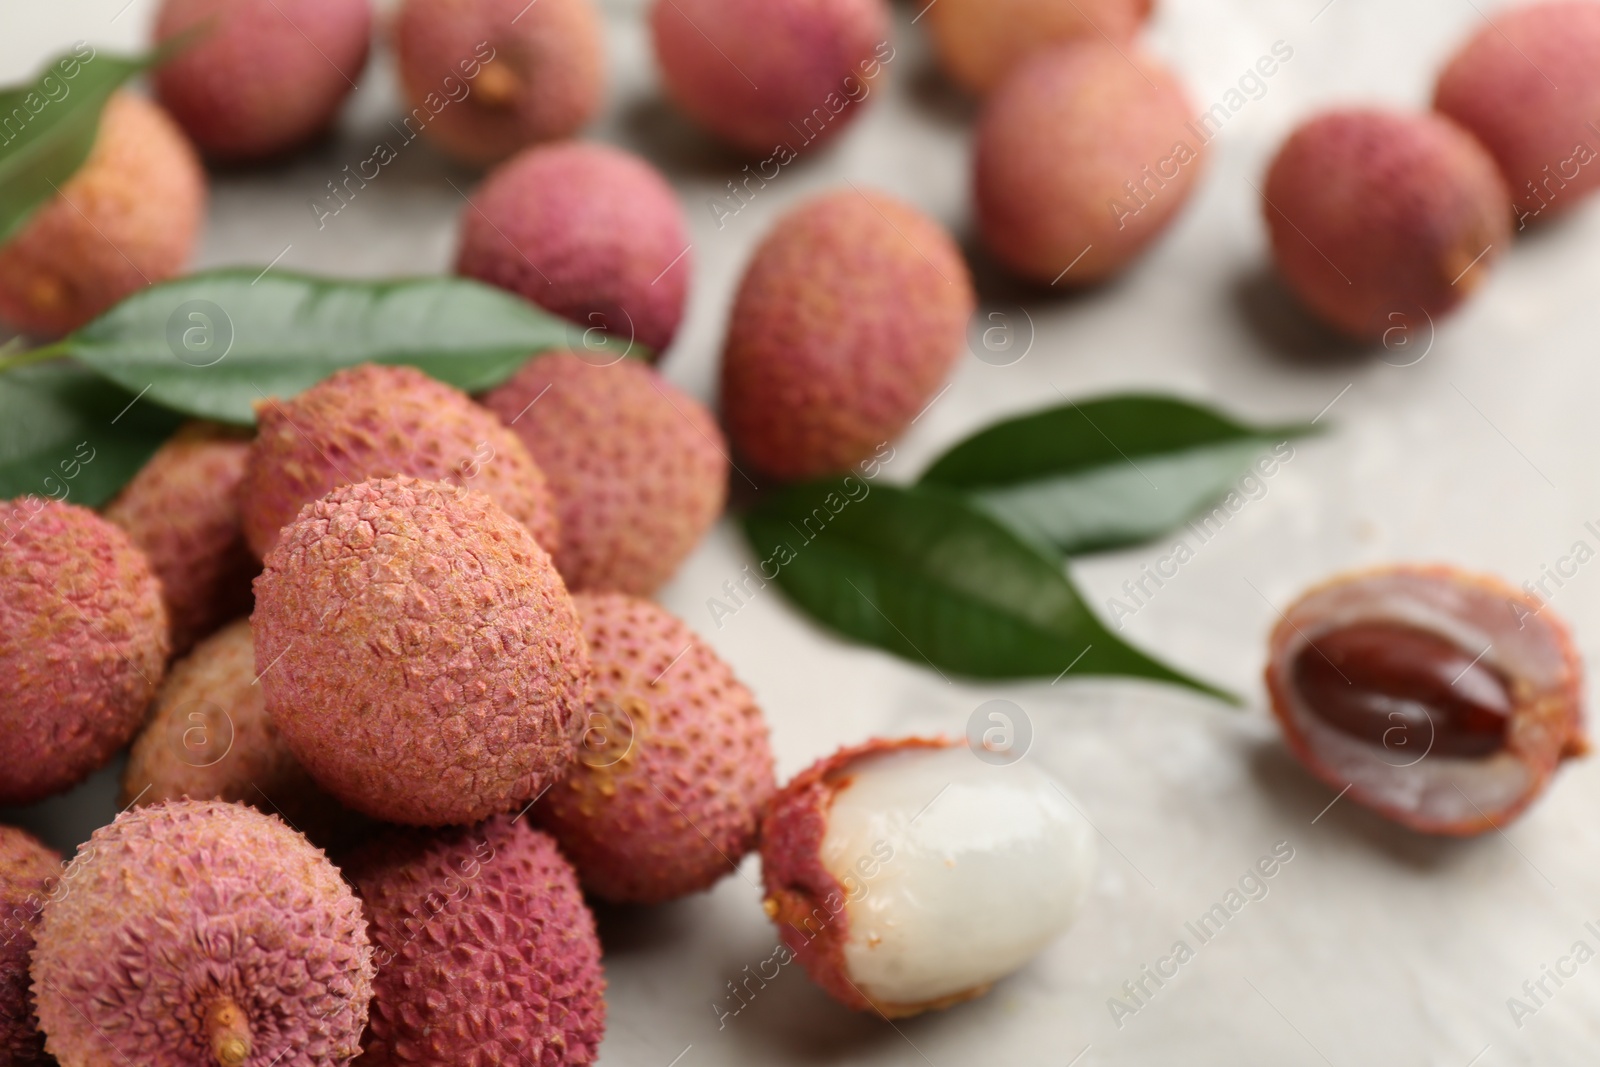 Photo of Fresh ripe lychee fruits on light grey table